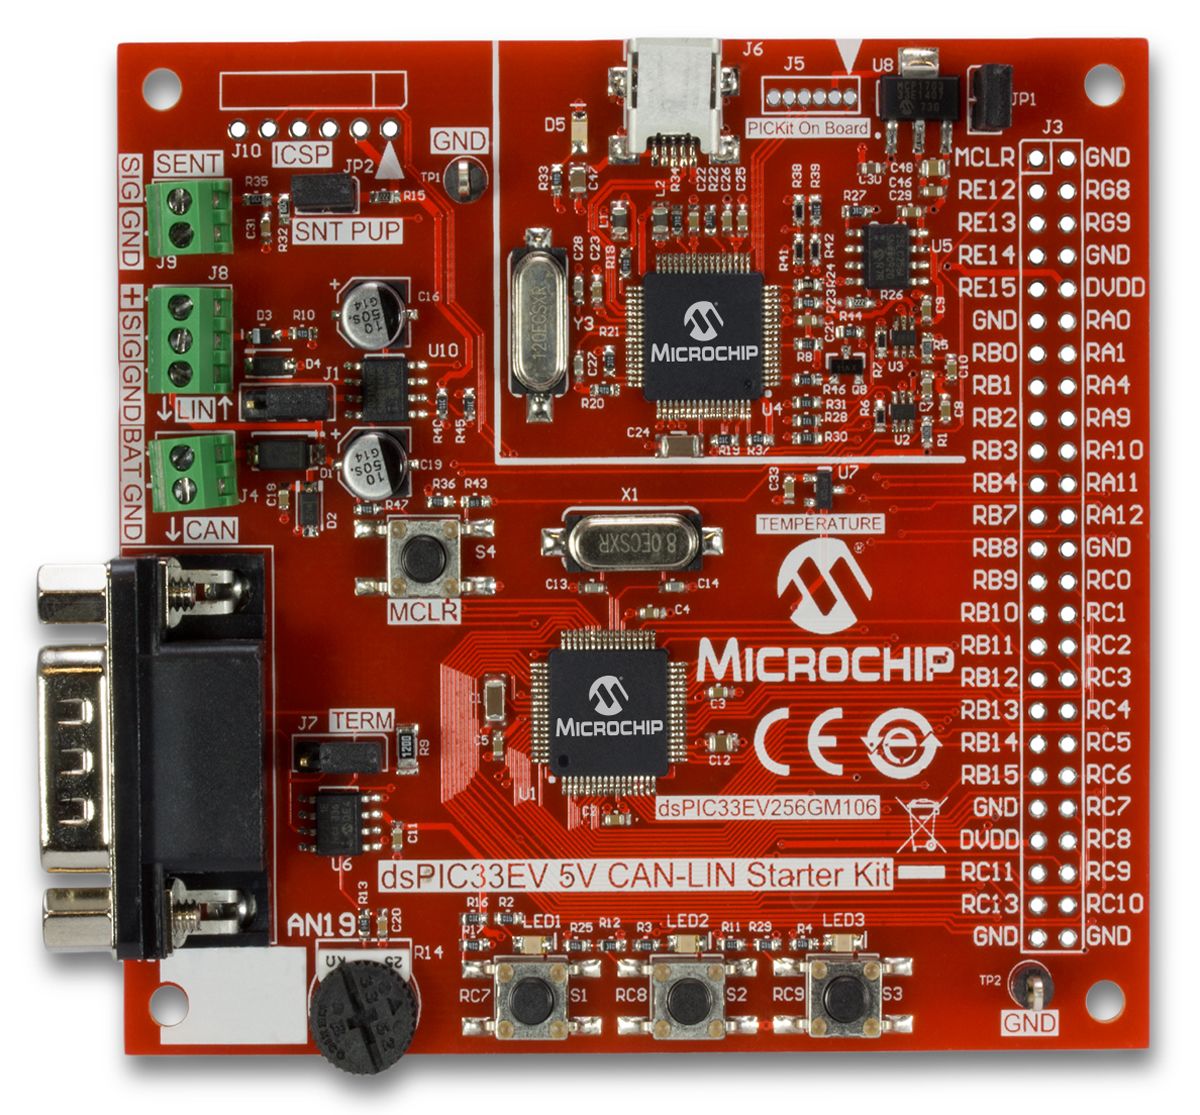 MicrochipEntwicklungskits Interface, dsPIC33EV 5V CAN-LIN STARTER KIT DM330018 Entwicklungskit